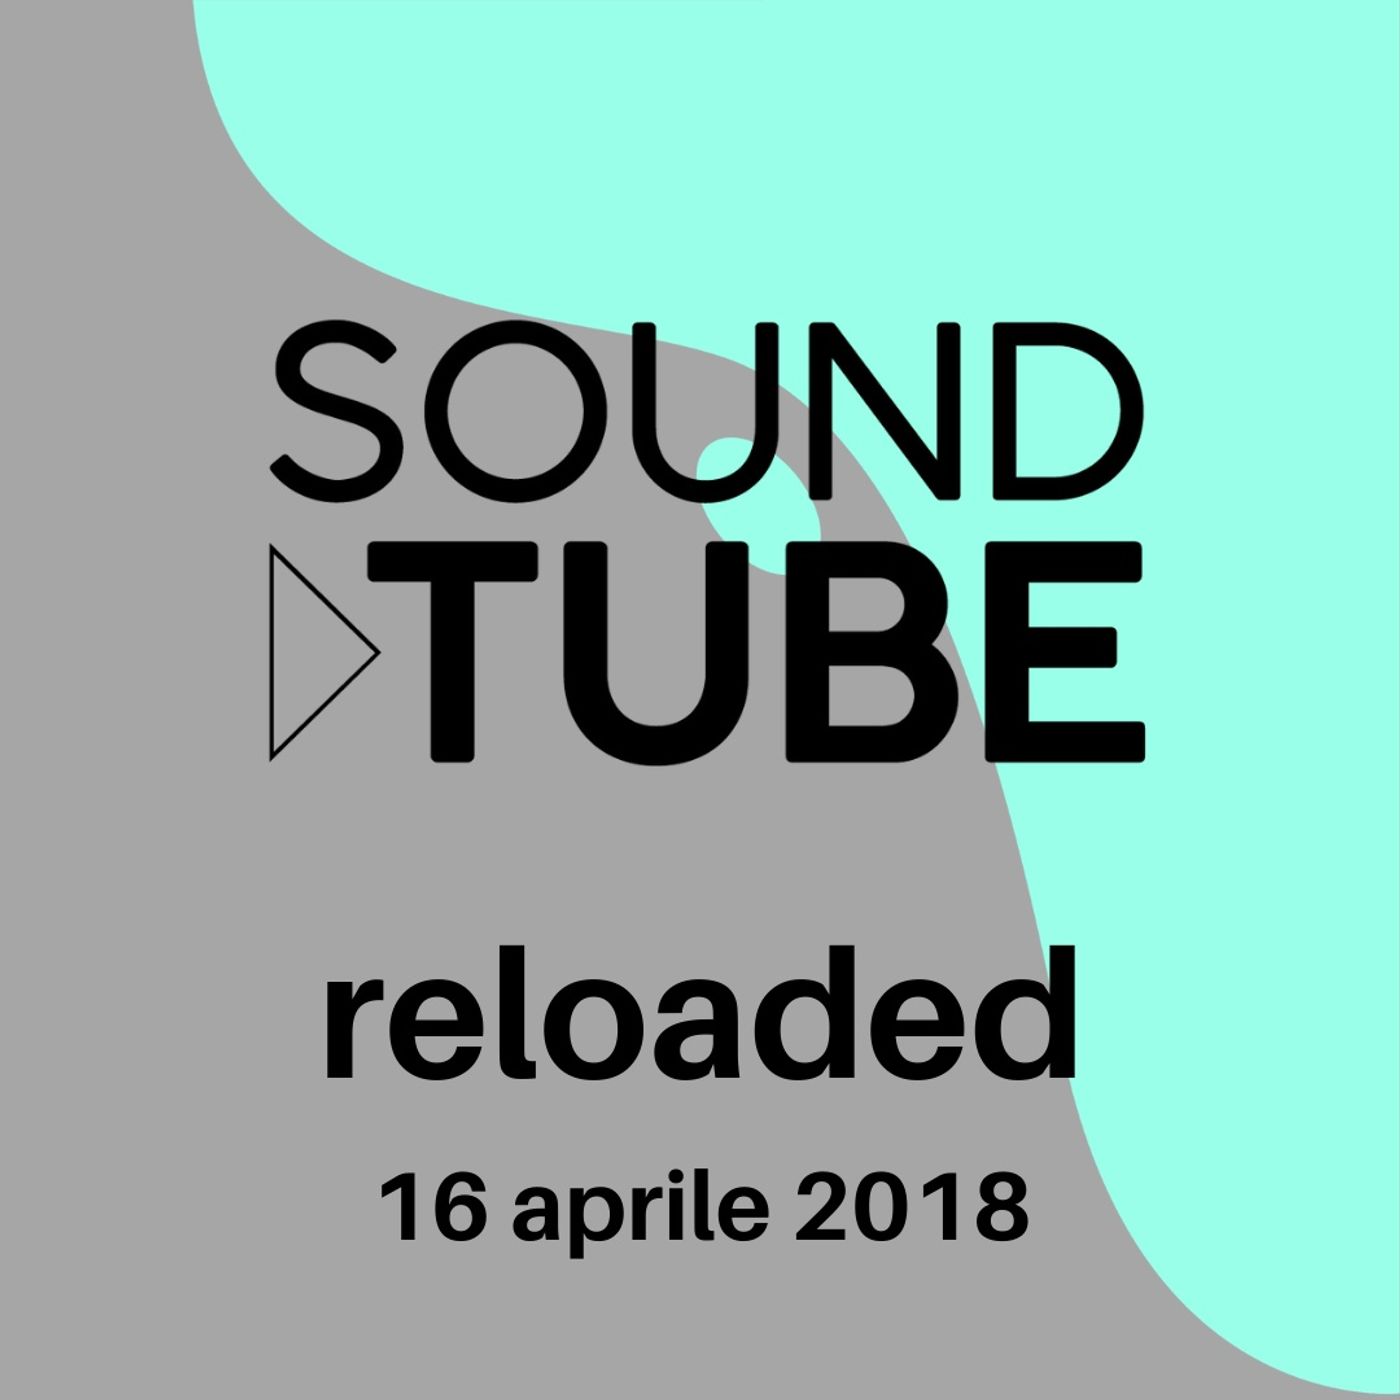 SoundTube Reloaded 17 - 16 aprile 2018